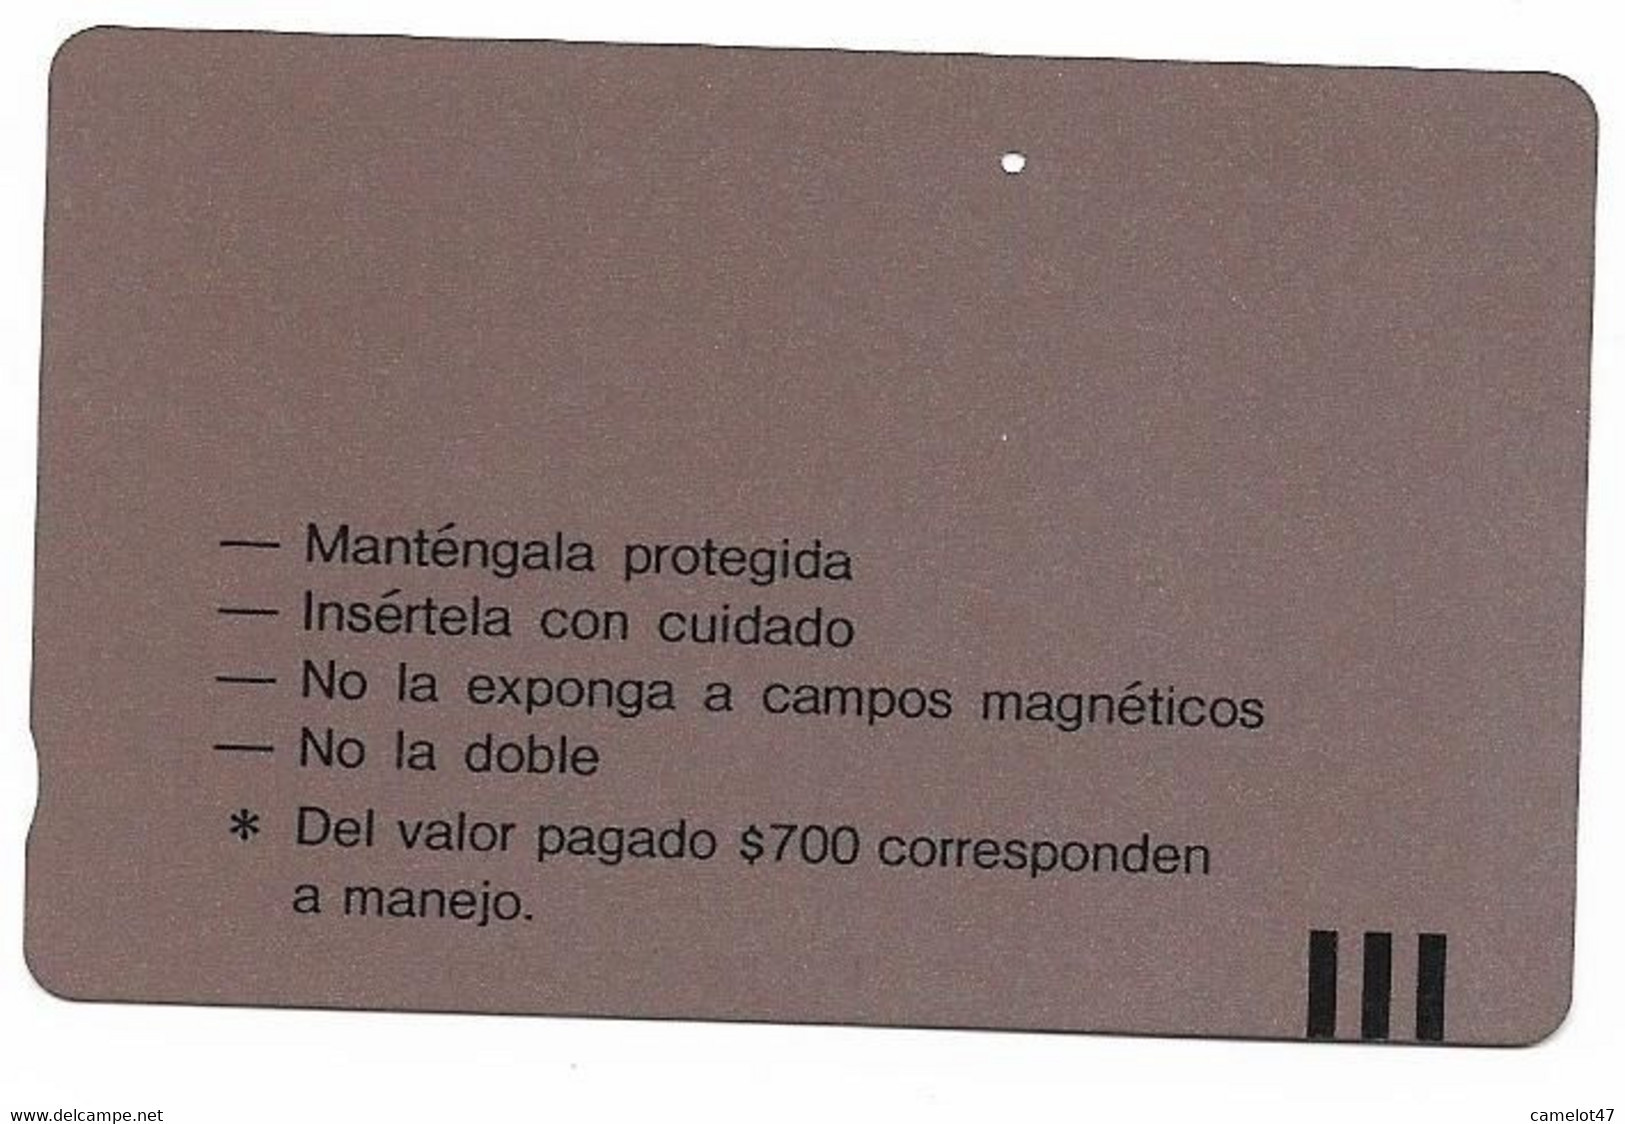 Colombia Tamura Used Phone Card, No Value, Collectors Item, # Colombia-2 - Kolumbien